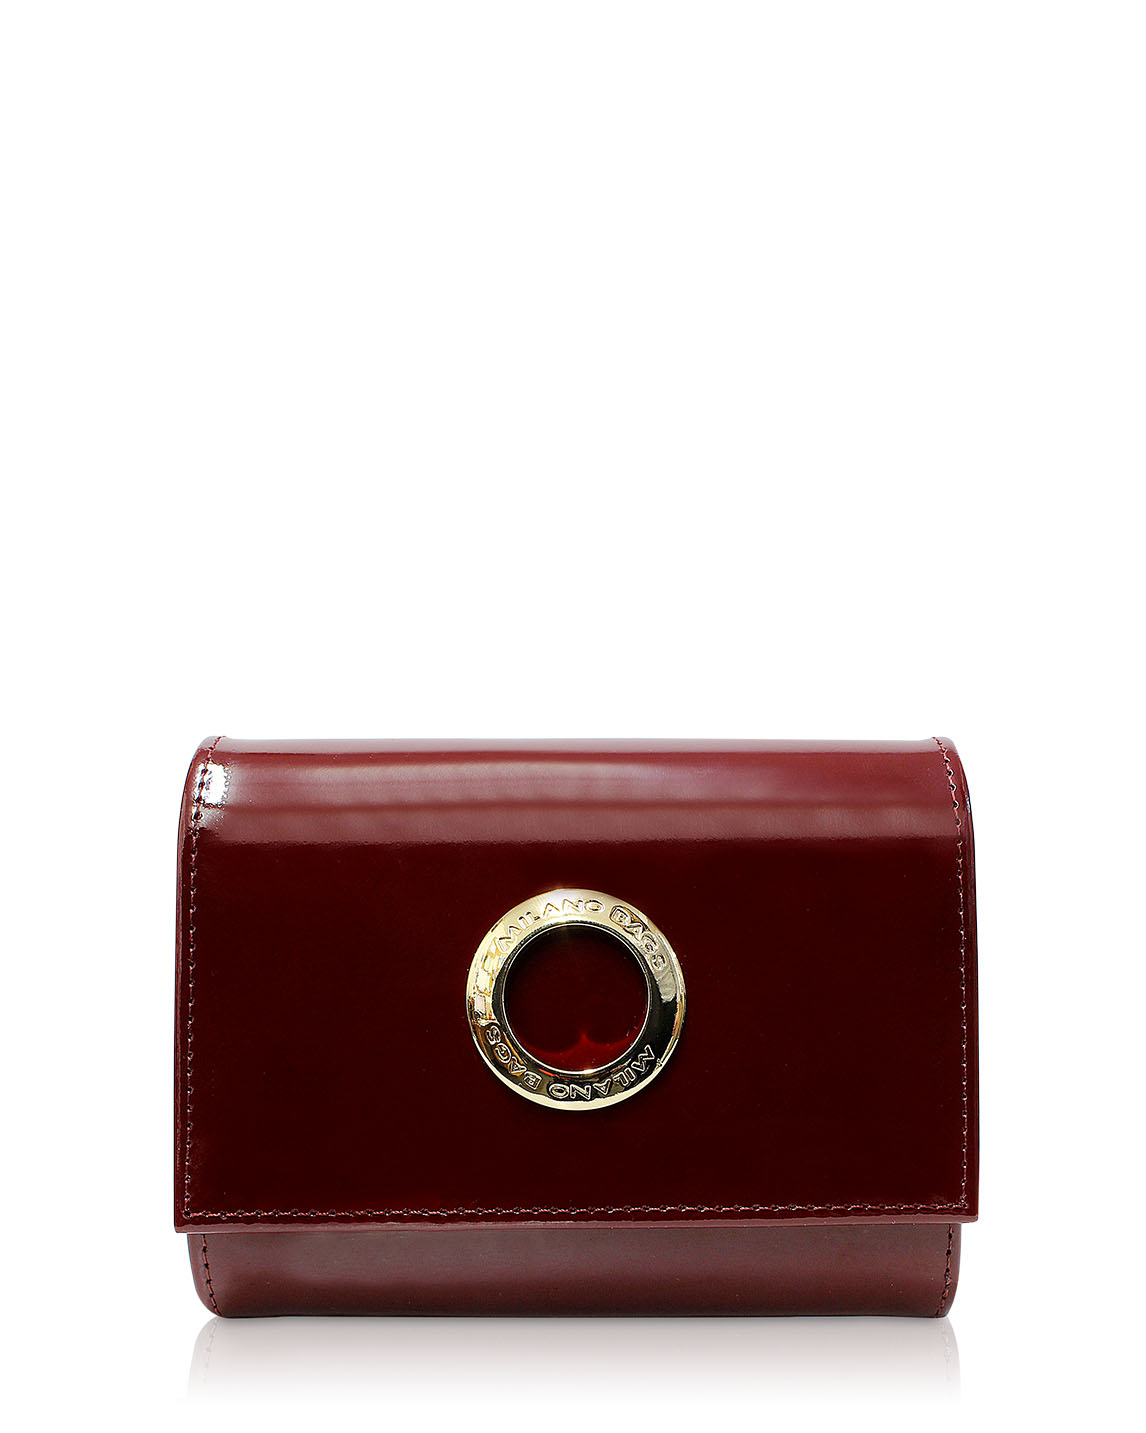 Billetera de Mujer BM-501 Color Rojo